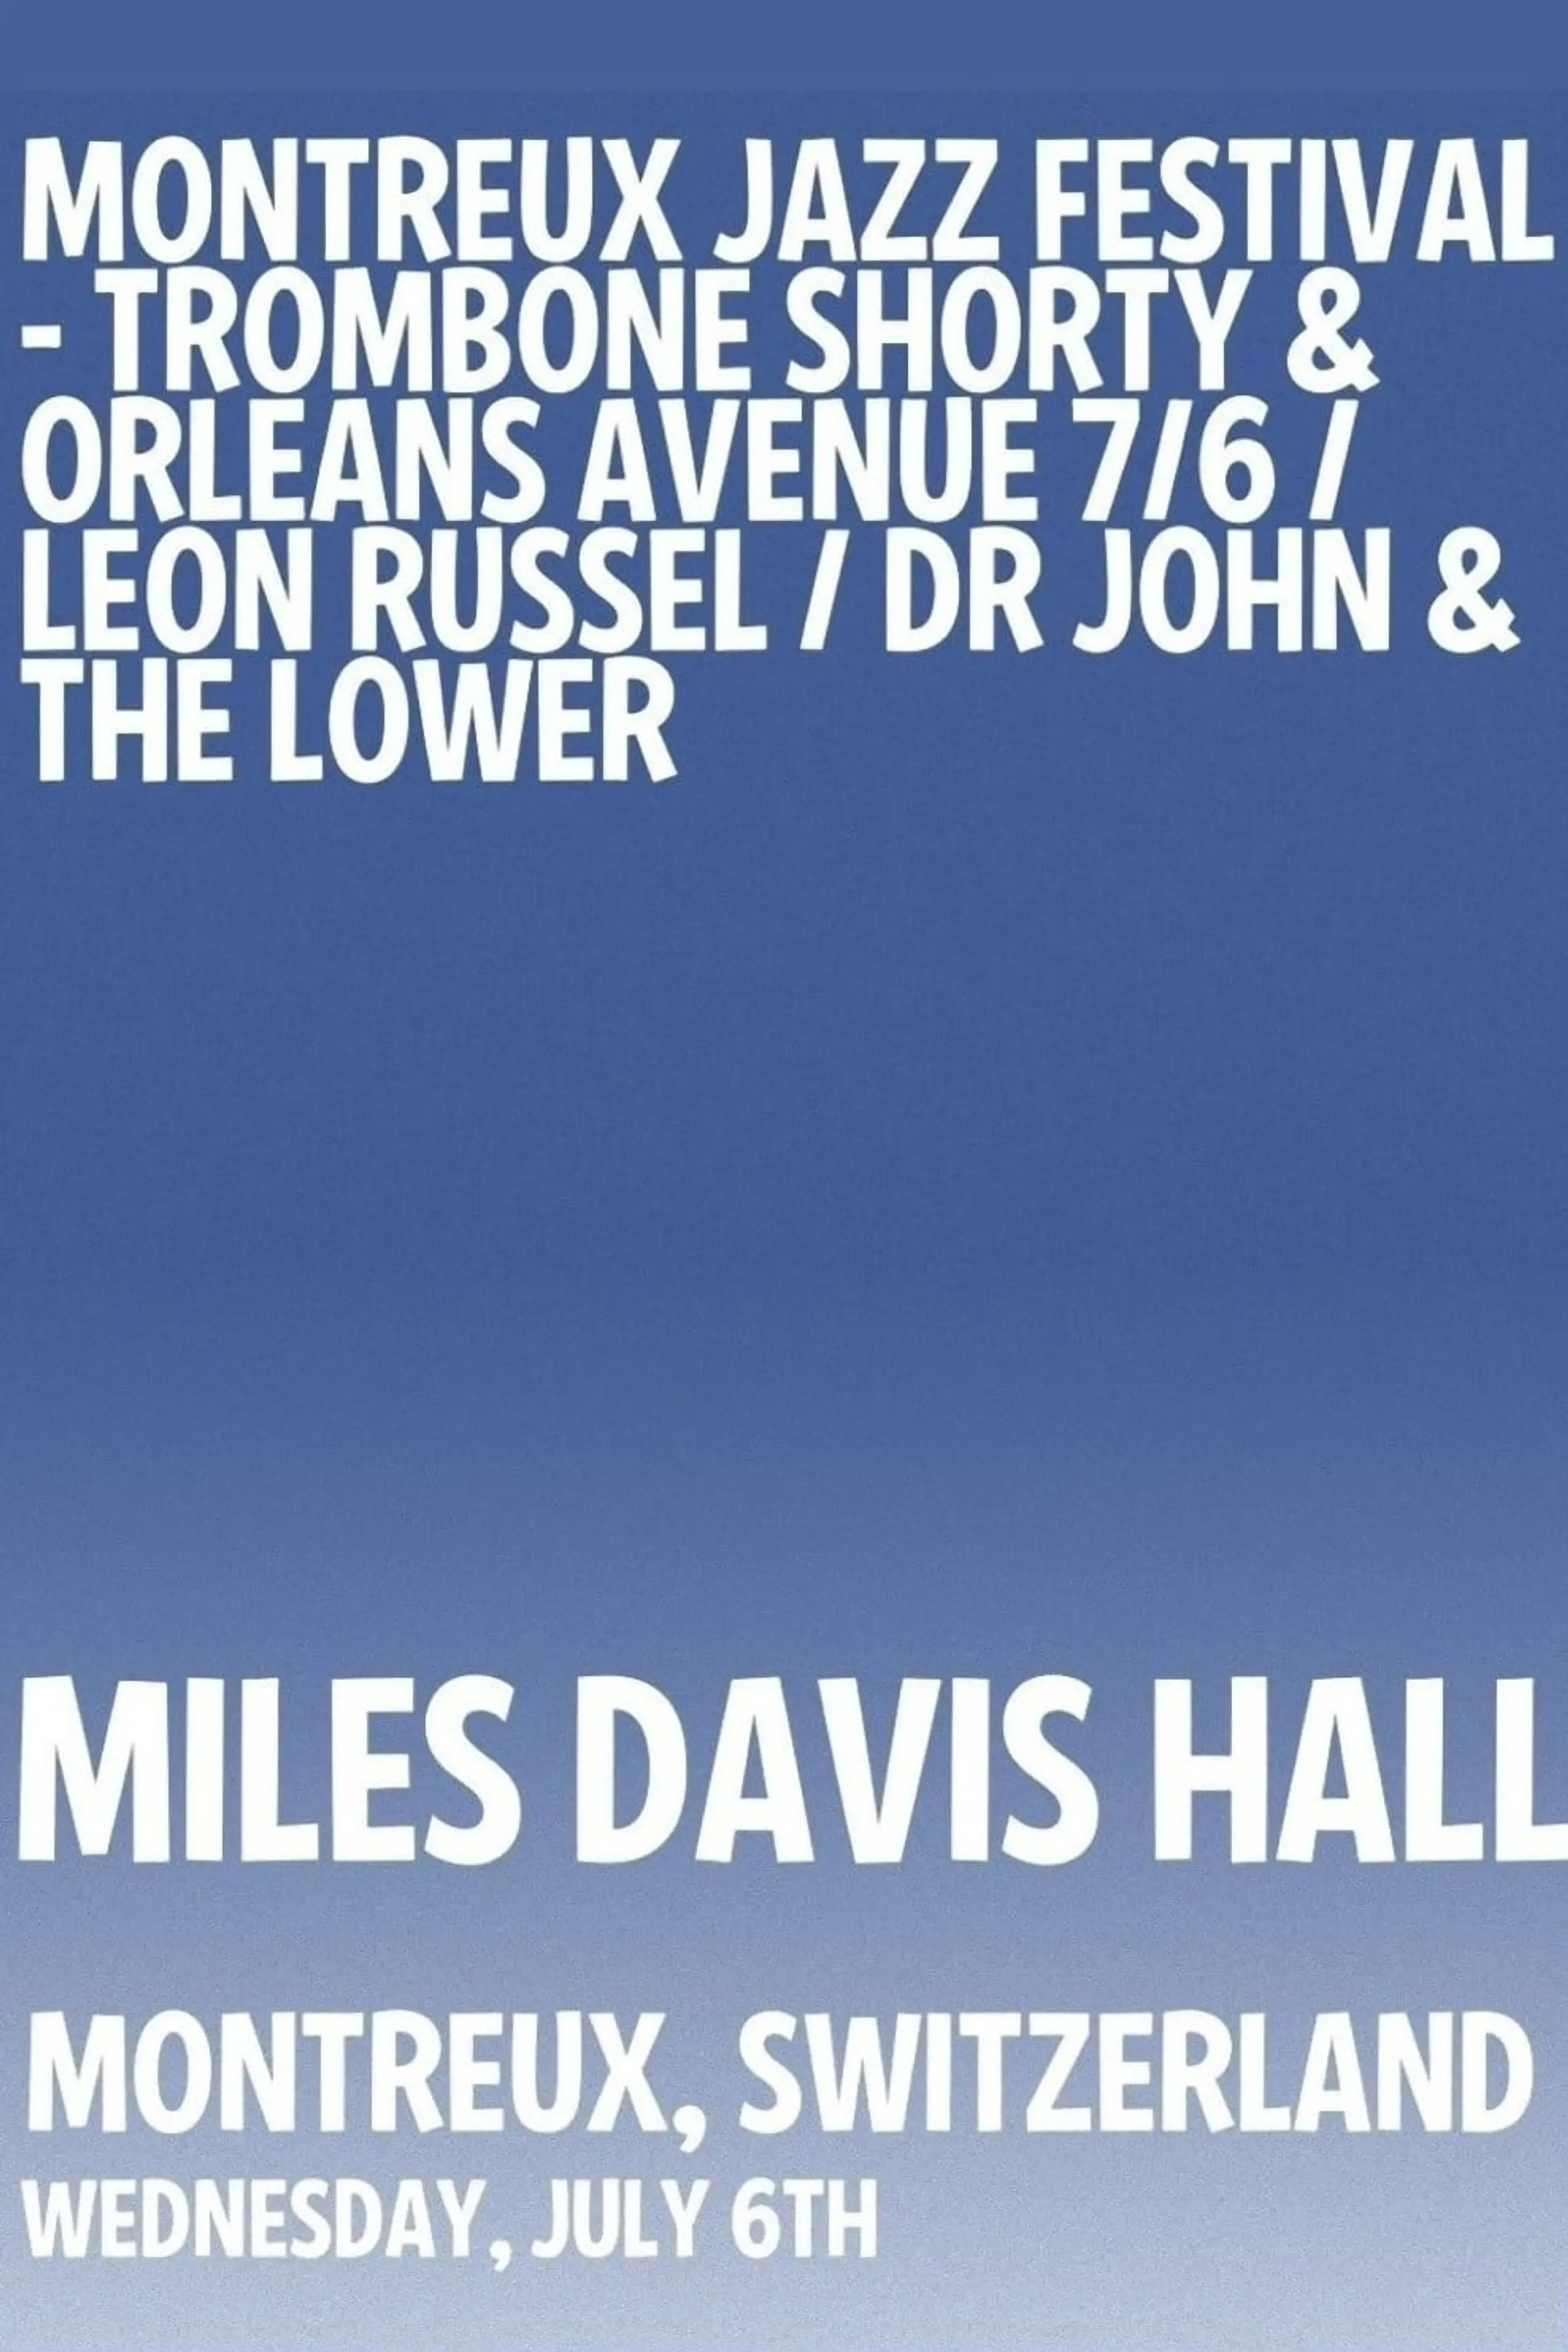 Dr. John & The Lower 911 - Montreux Jazz Festival